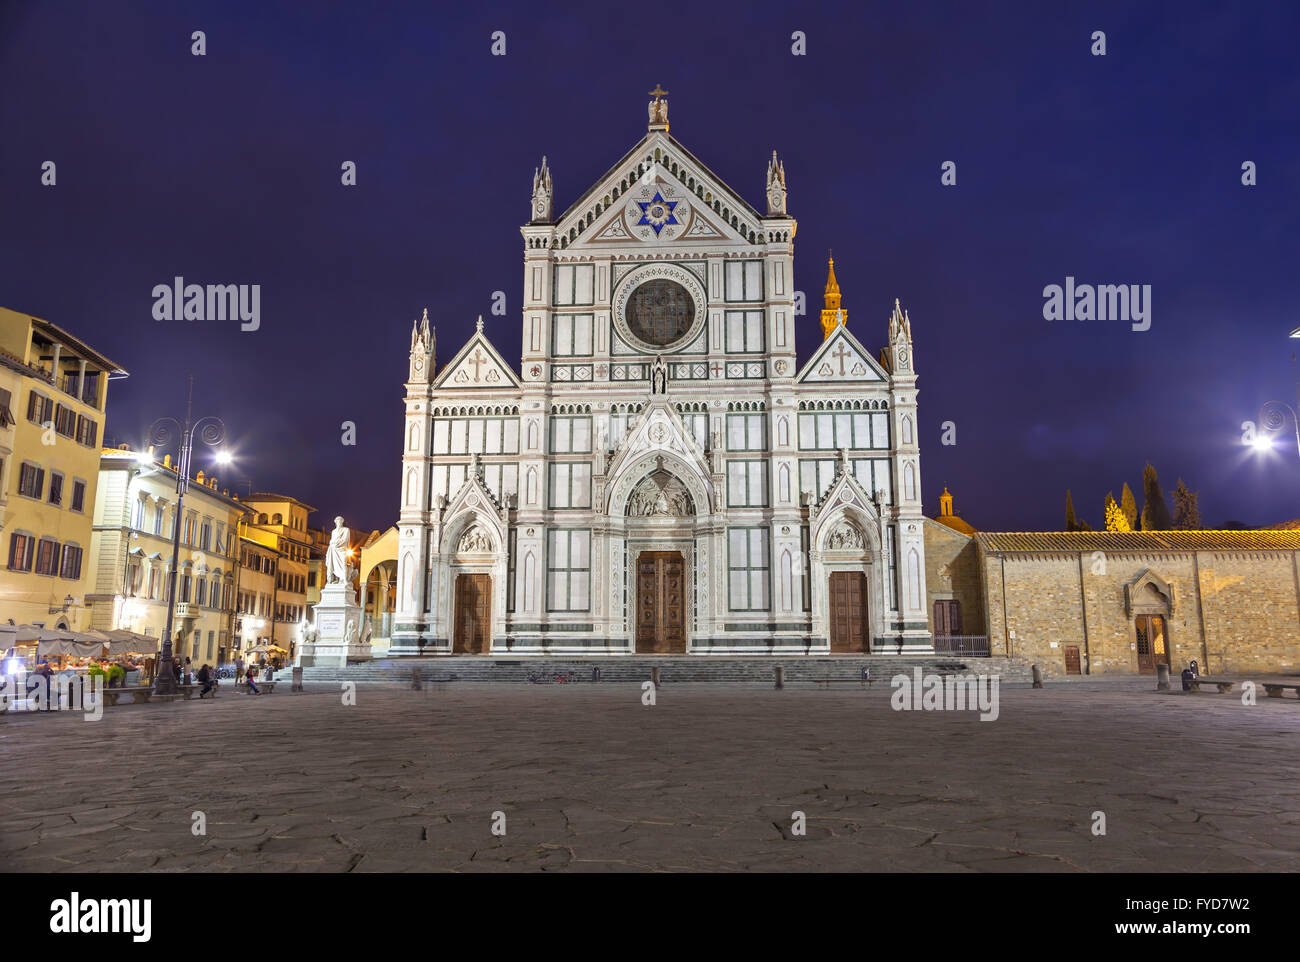 Basilica of Santa Croce - the principal Franciscan church in Florence, Italy at the evening Stock Photo